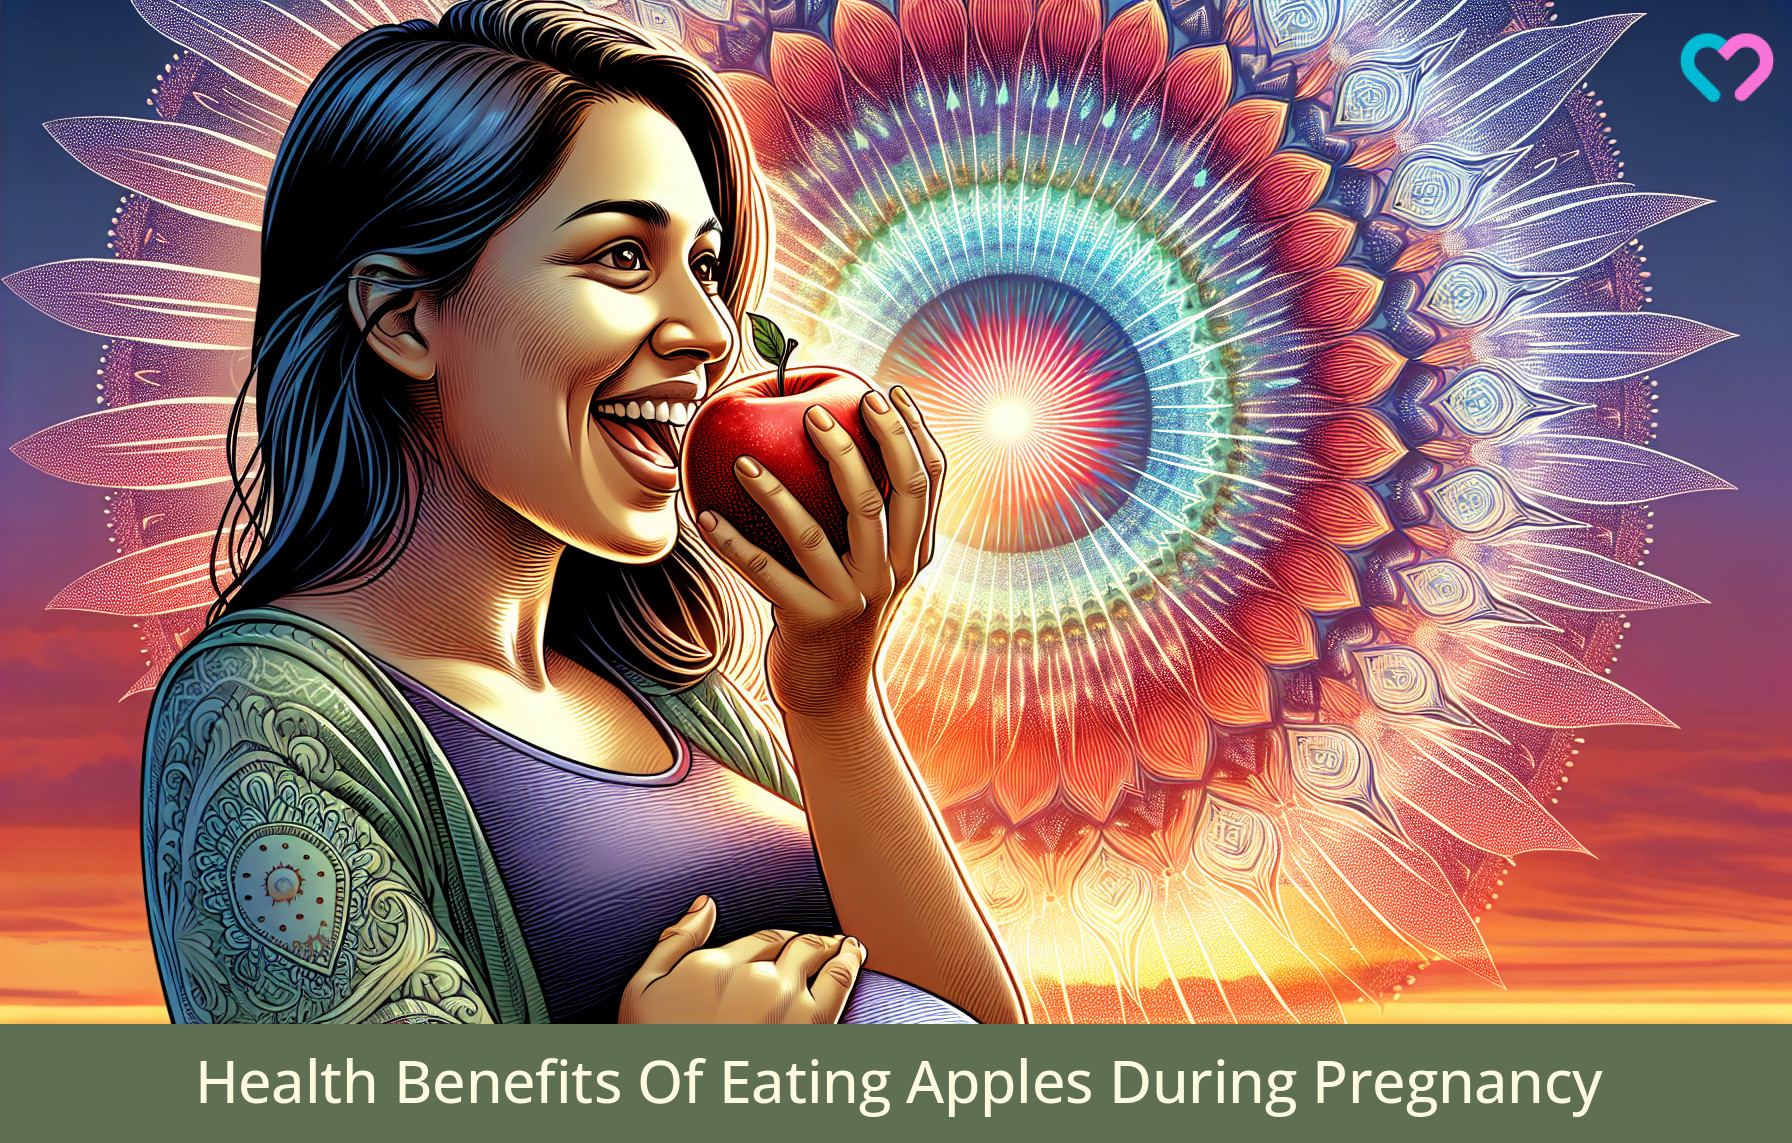 Apples During Pregnancy_illustration